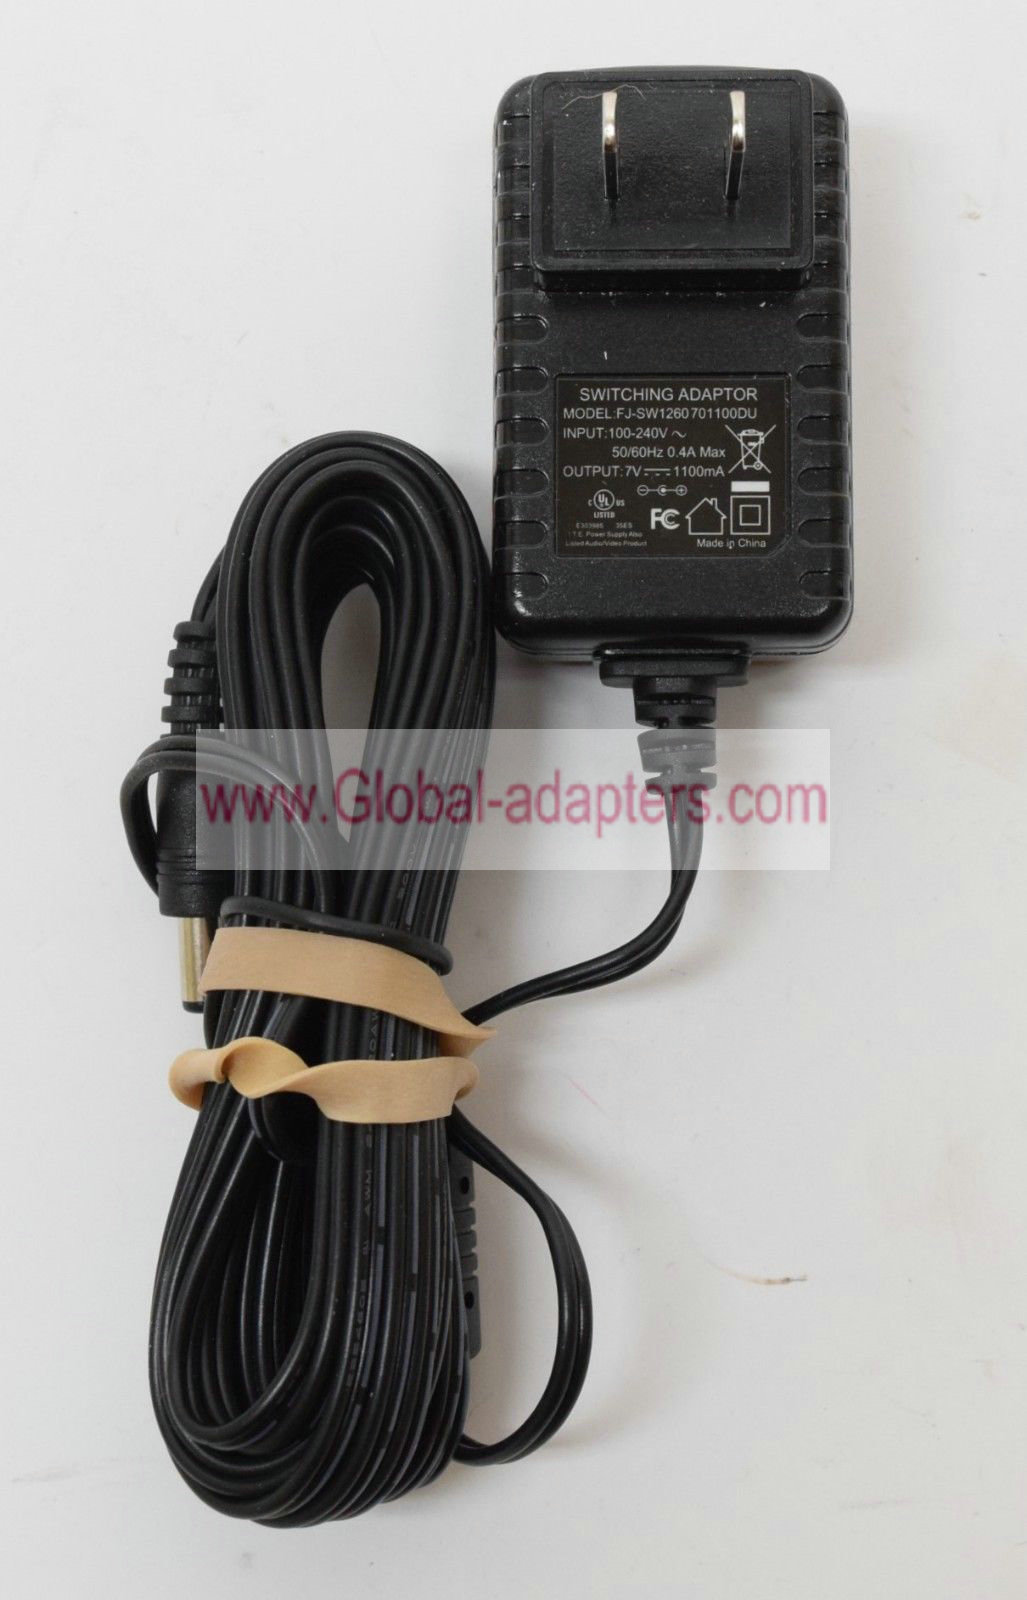 Genuine FJ-SW1260701100DU 7V 1100mA Switching Adaptor Power Supply AC/DC Adapter